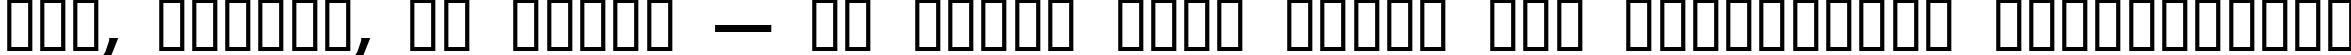 Пример написания шрифтом Brian James Condensed Bold текста на украинском